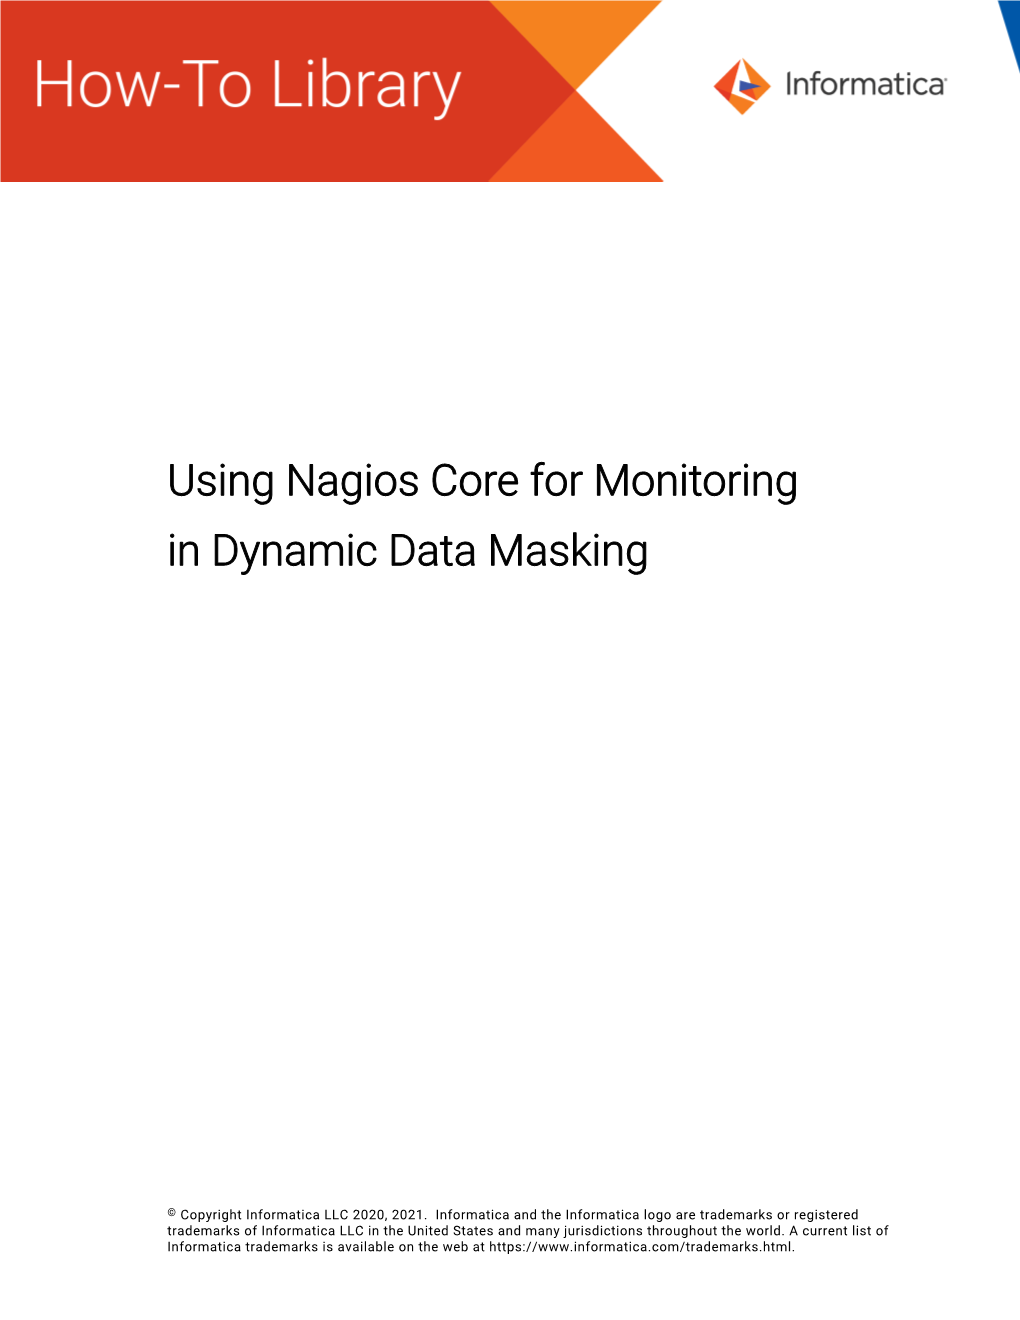 Using Nagios Core for Monitoring in Dynamic Data Masking